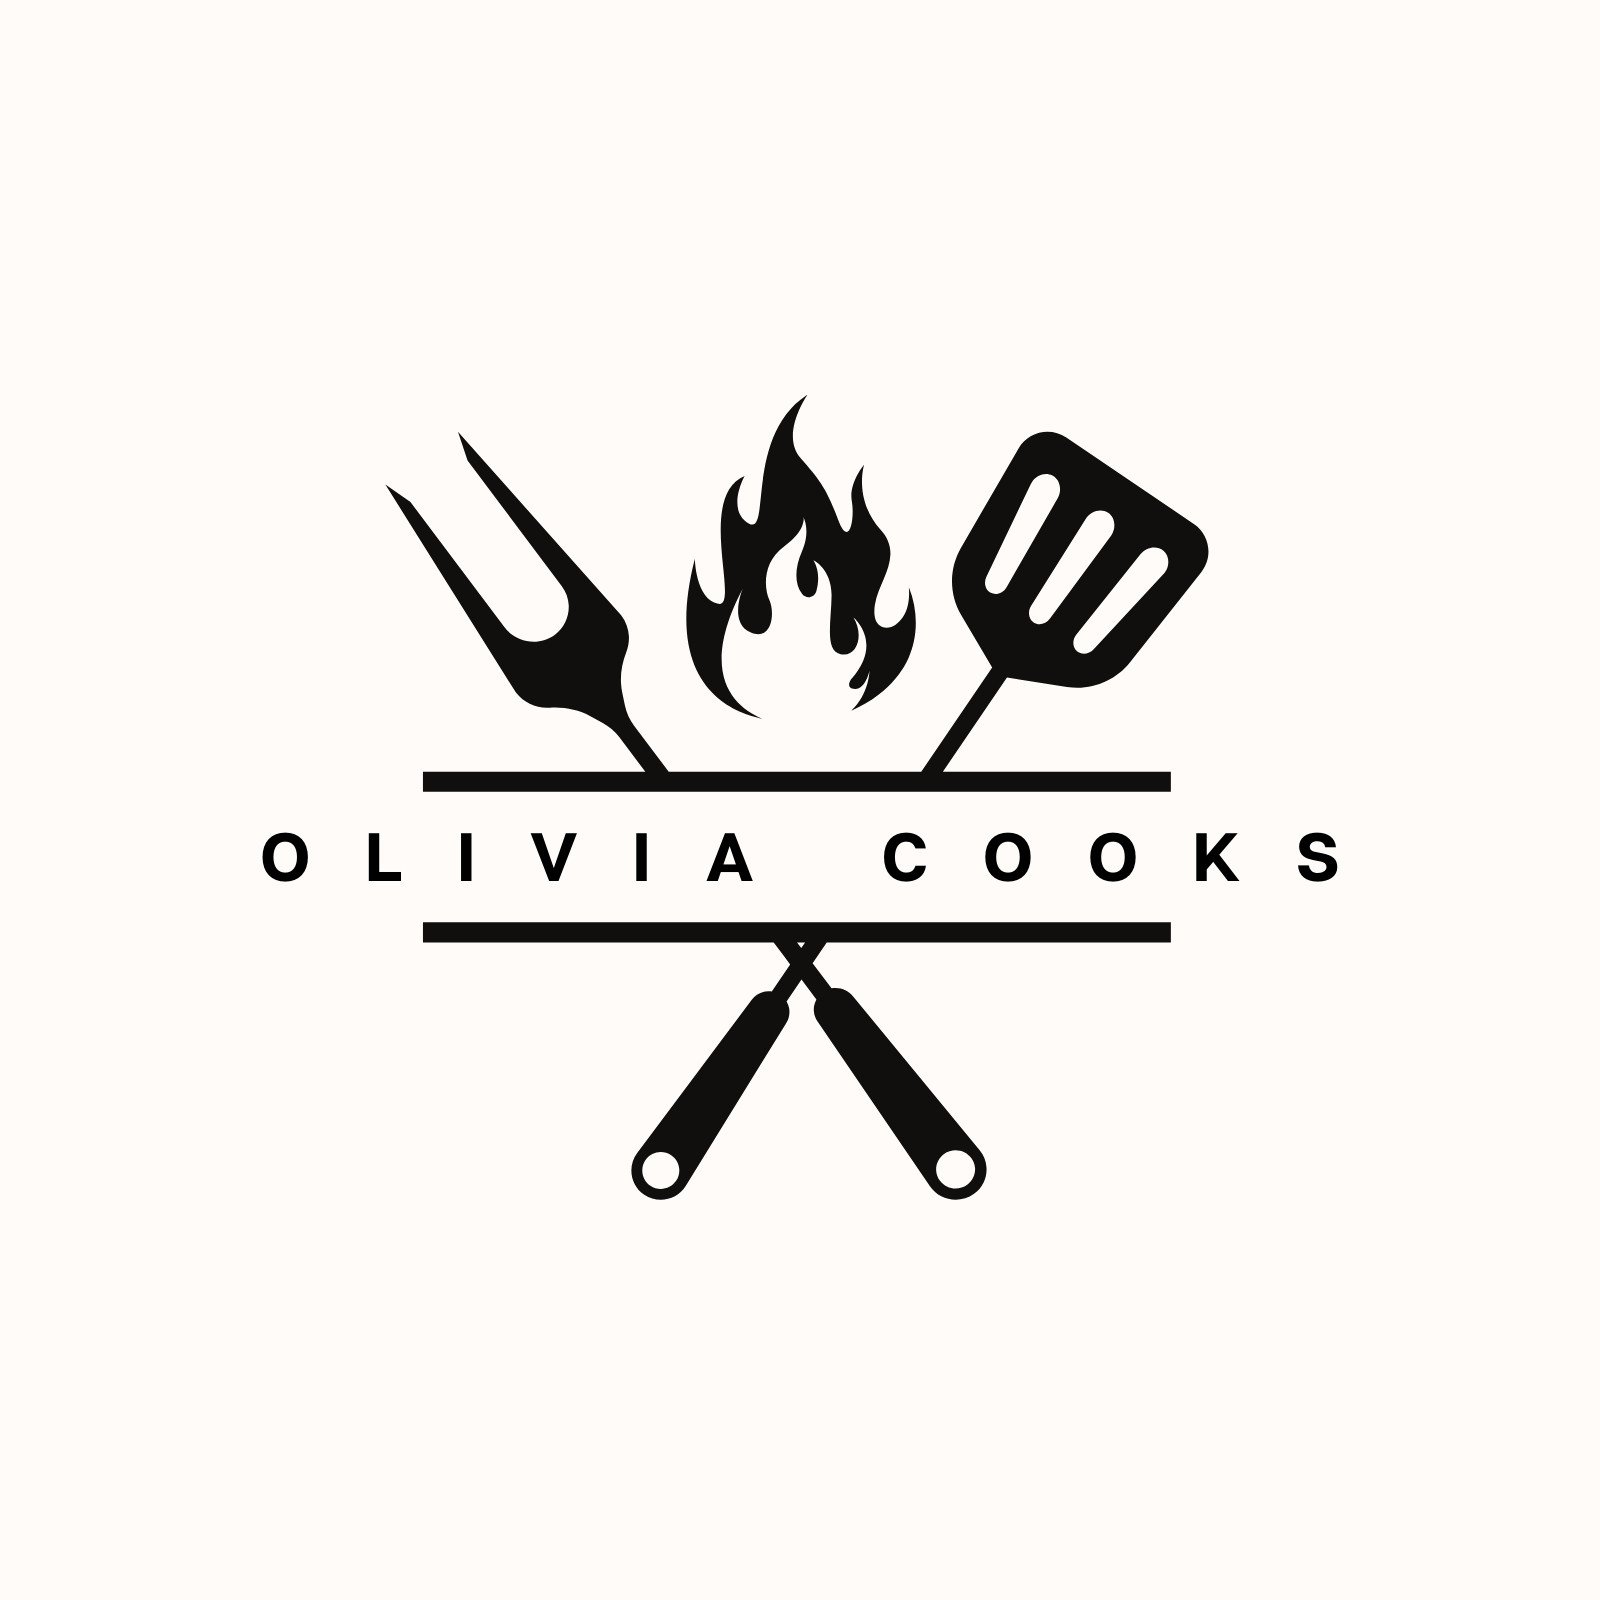 restaurant logos images